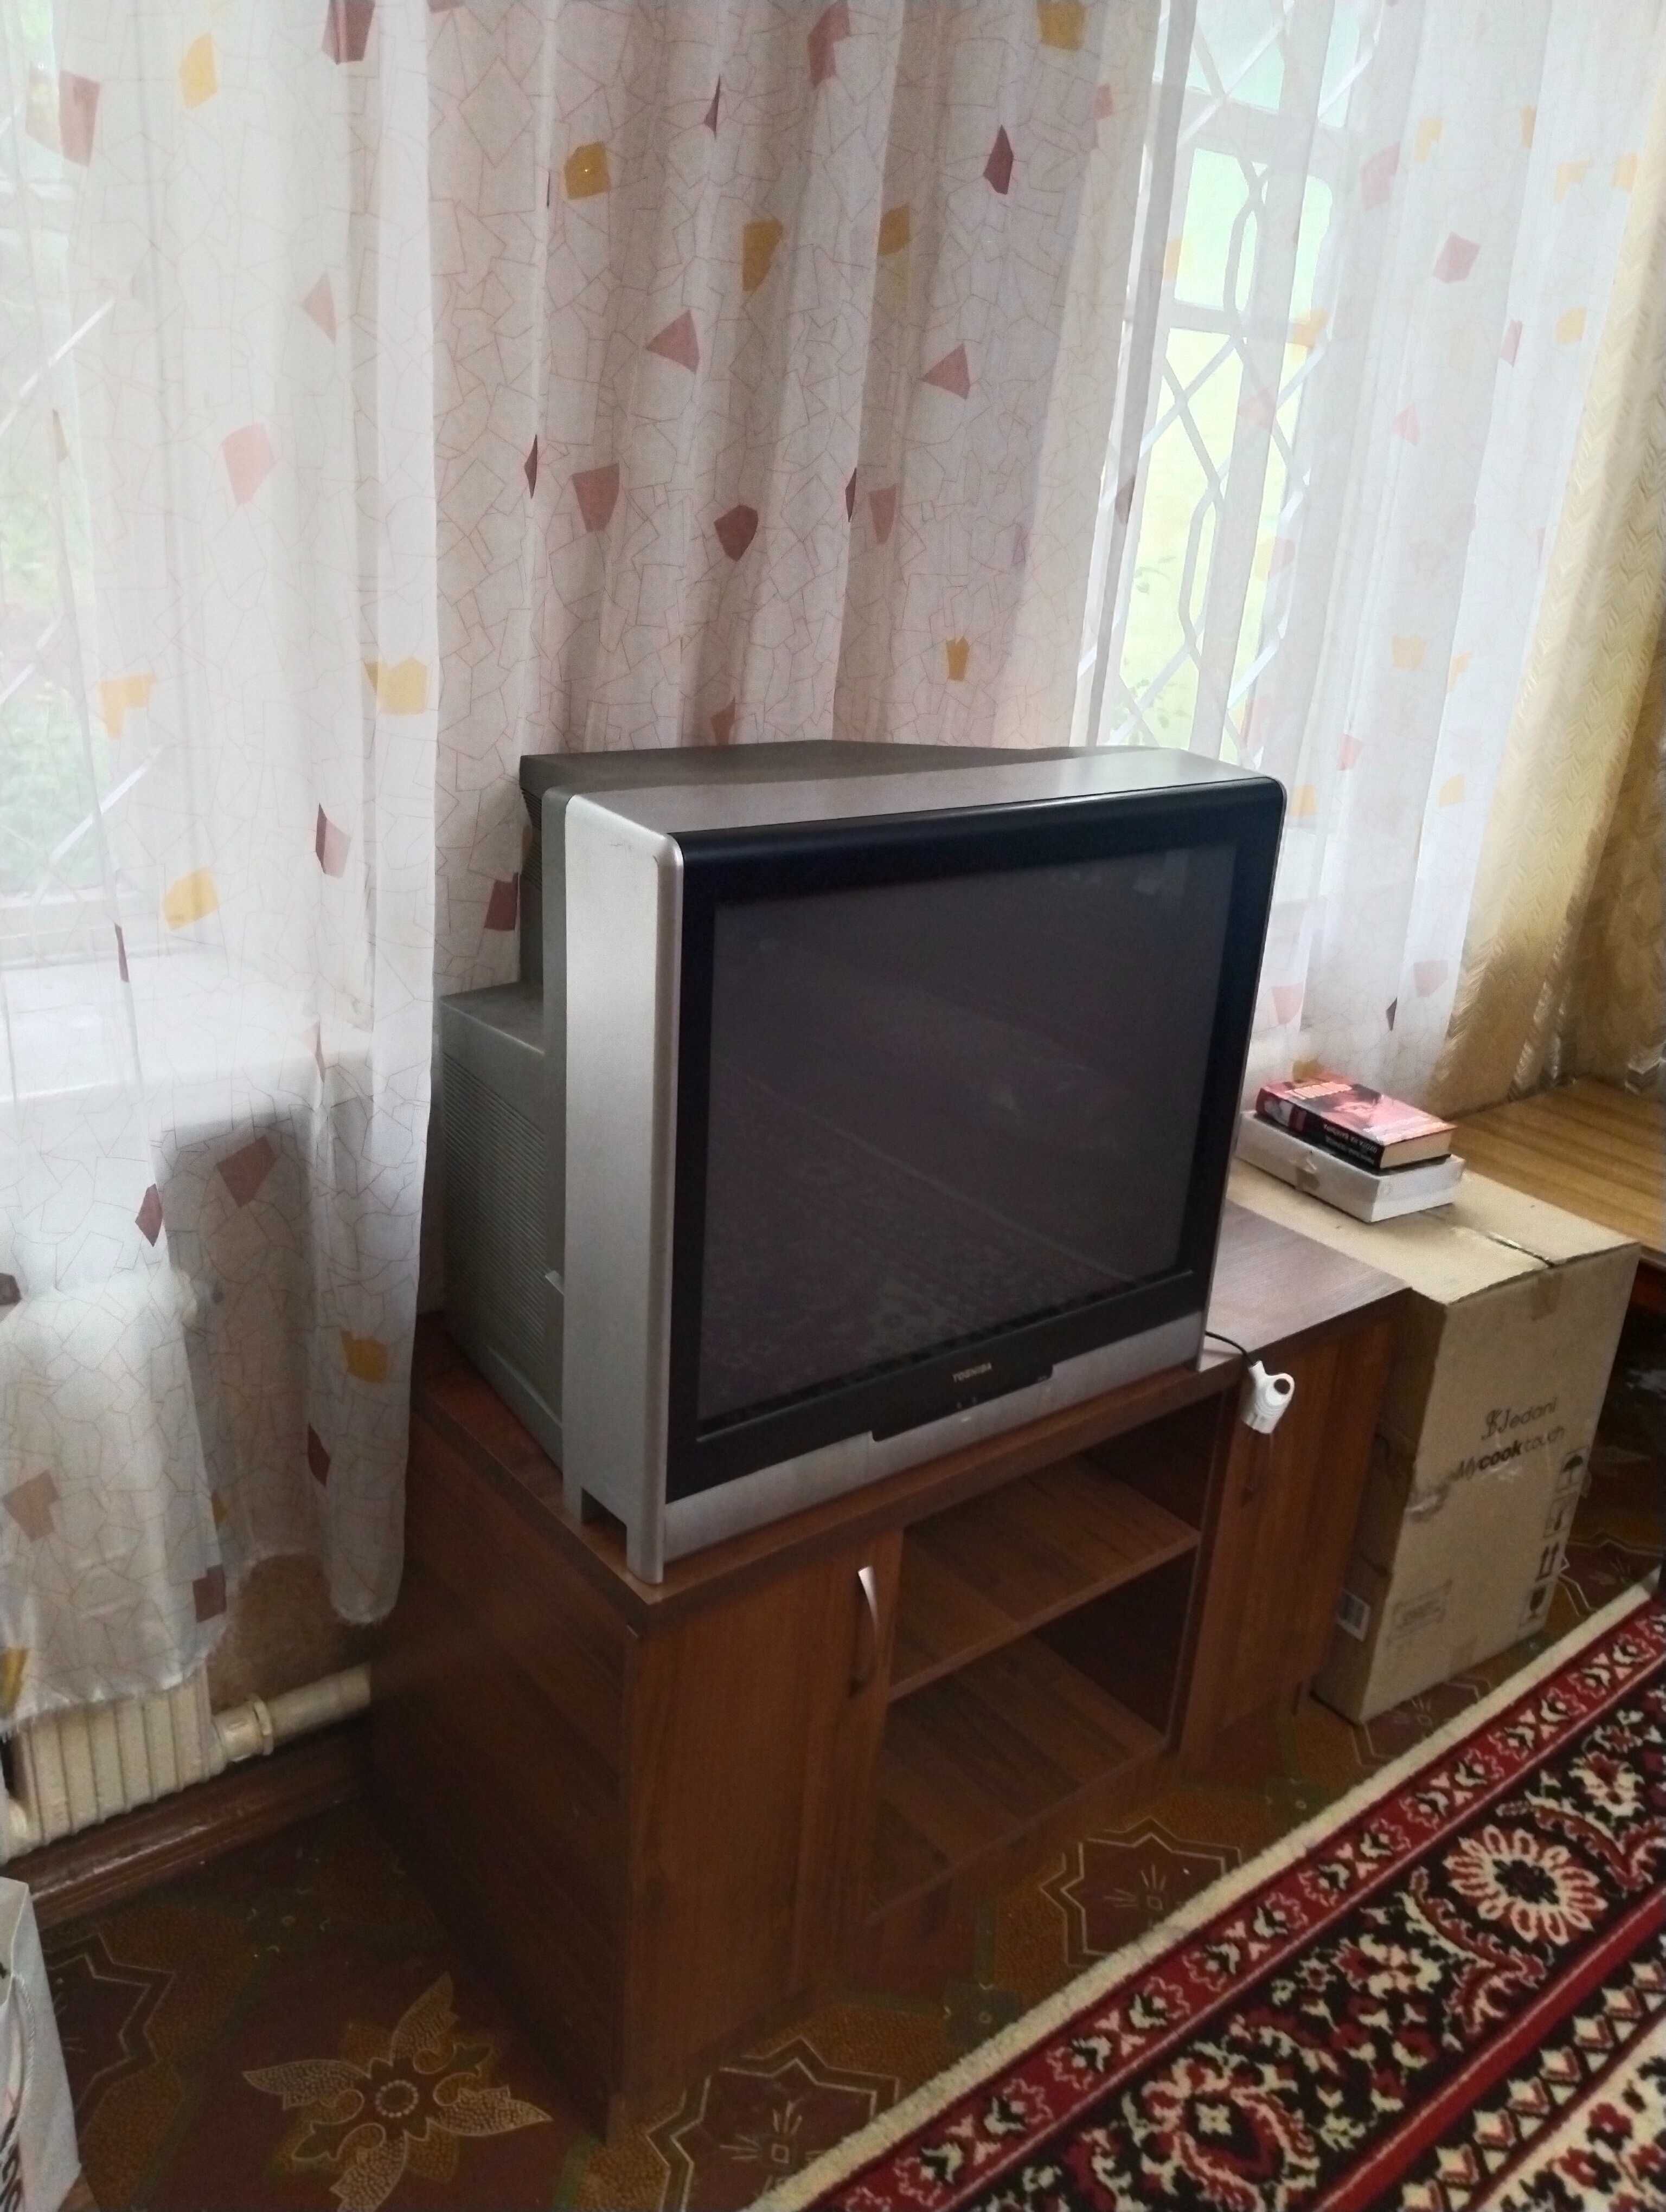 Старый телевизор TOSHIBA, рабочий